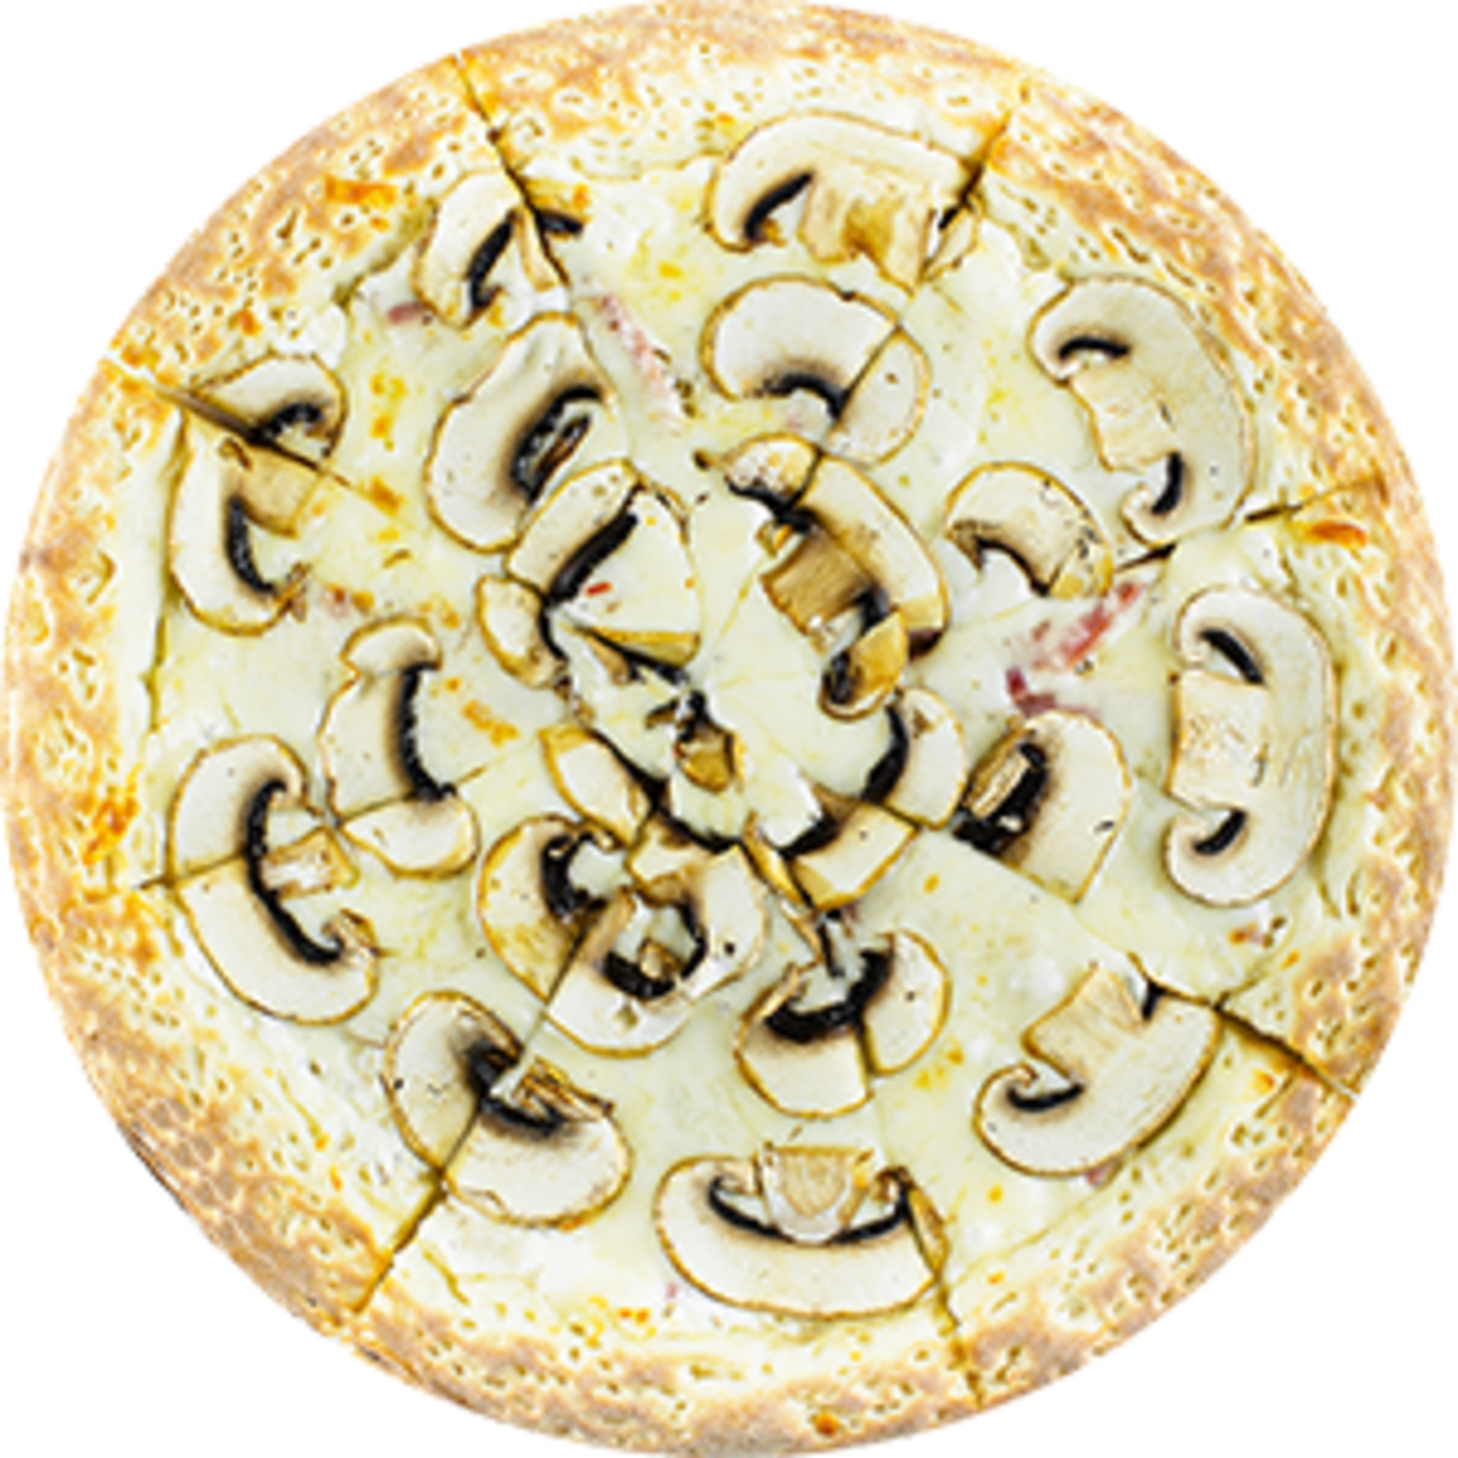 пицца грибная калории фото 118